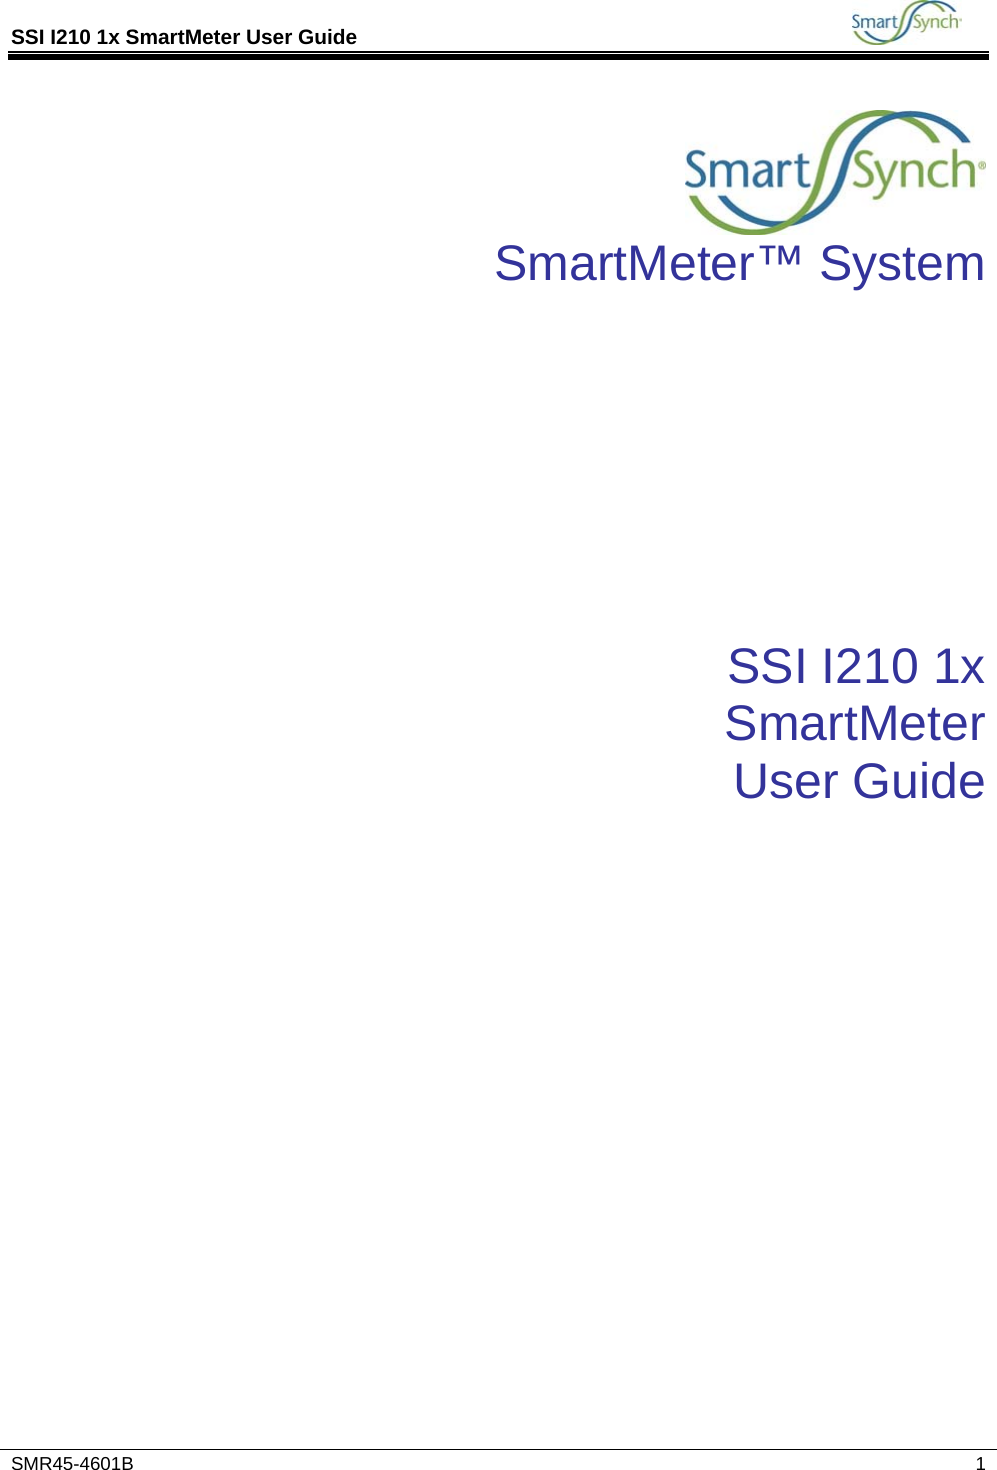 SSI I210 1x SmartMeter User Guide           SMR45-4601B   1     SmartMeter™ System       SSI I210 1x  SmartMeter User Guide                